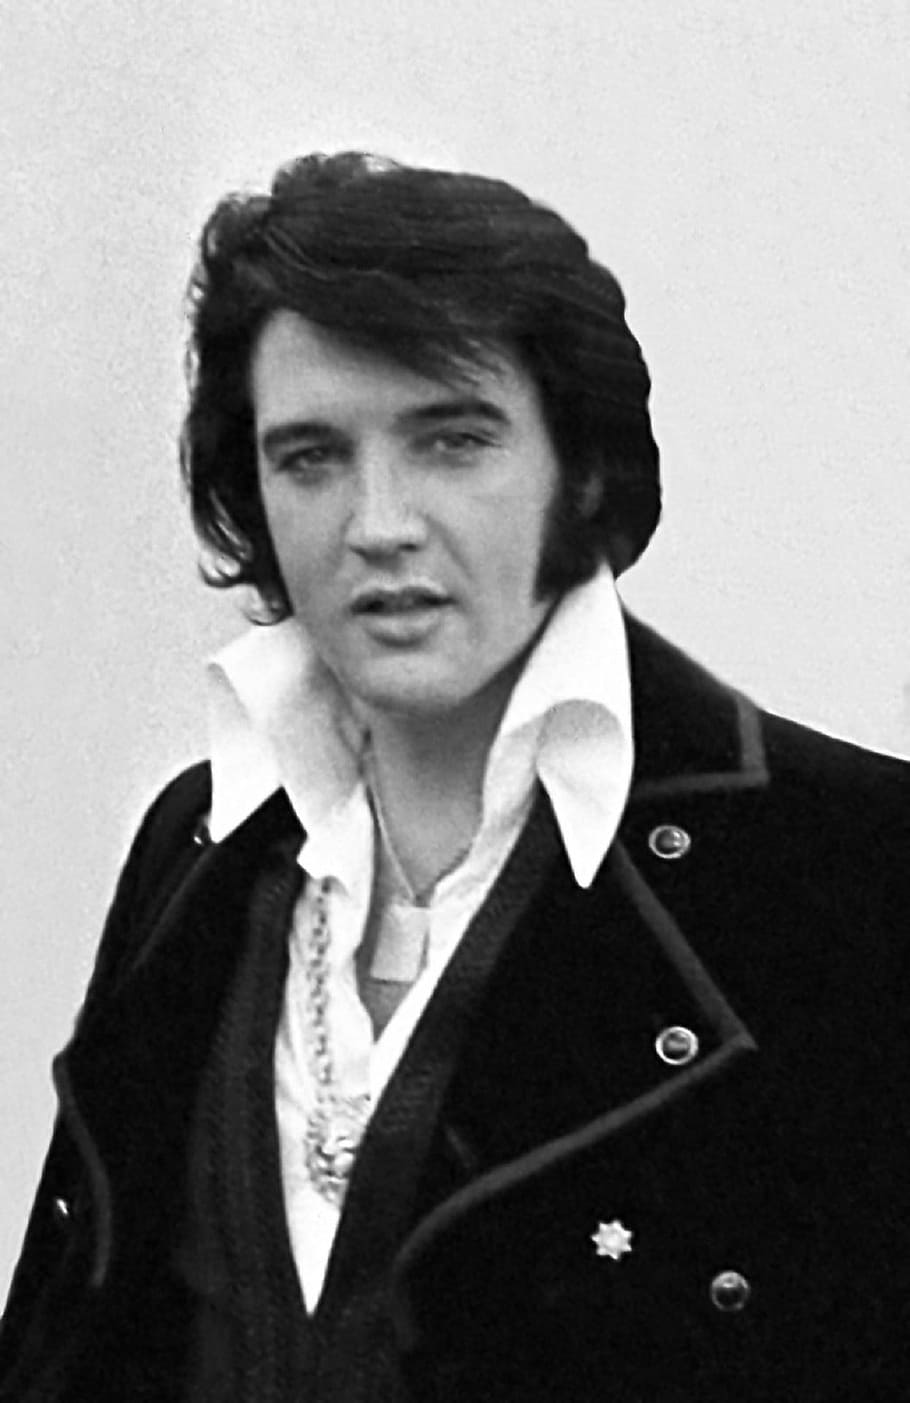 grayscale photo of Elvis Presley in black suit jacket, recording artist